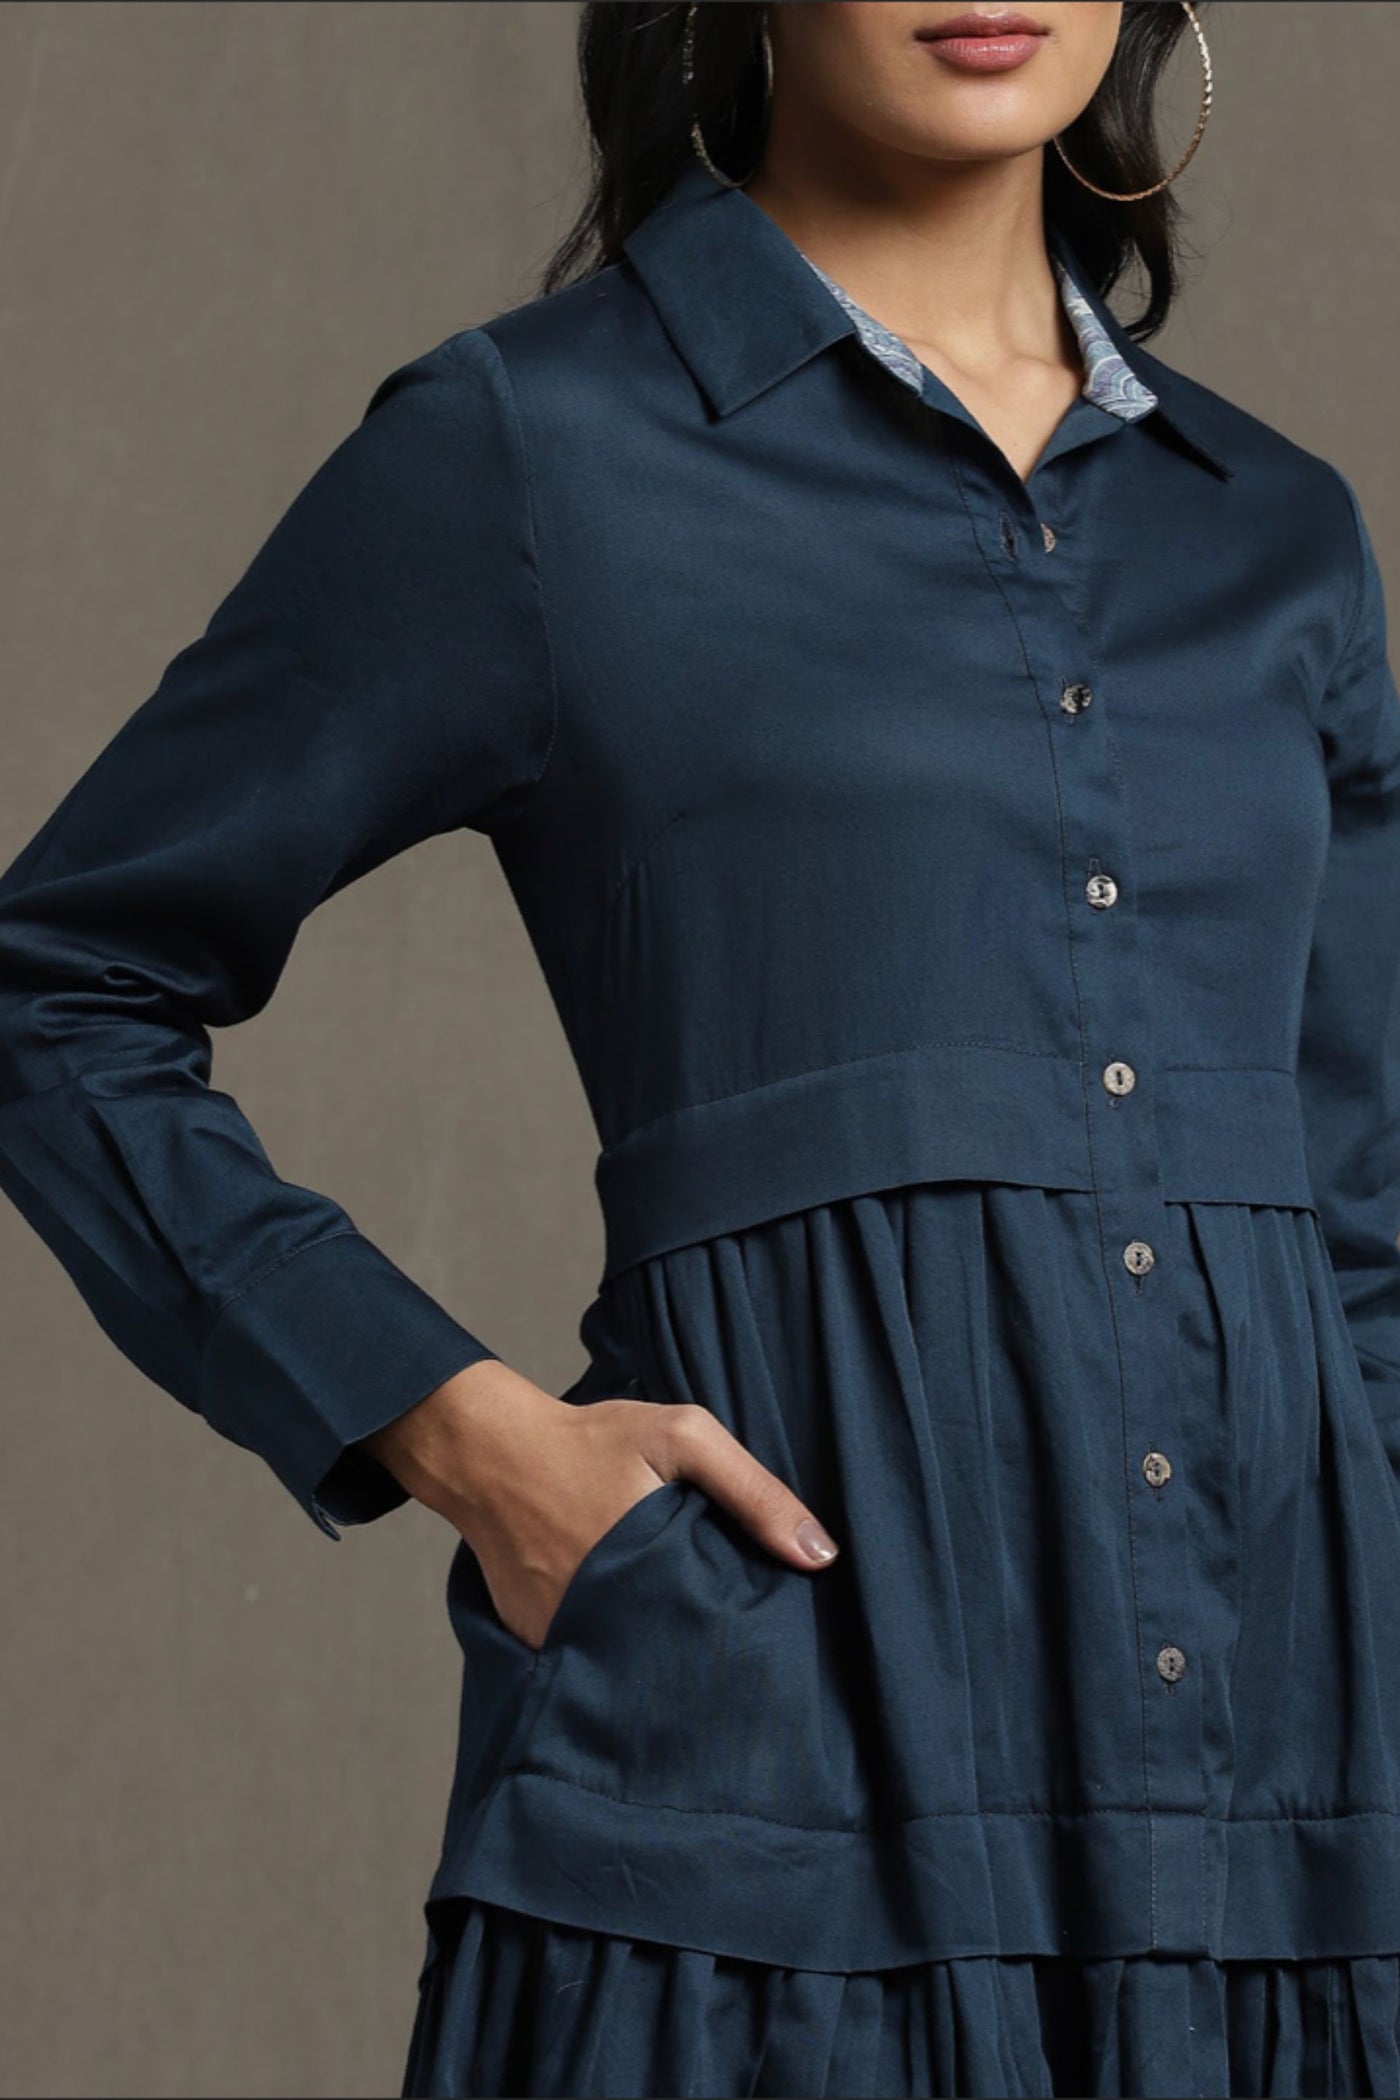 Ritu Kumar Blue shirt dress with ruffled hem Indian designer wear online shopping melange singapore